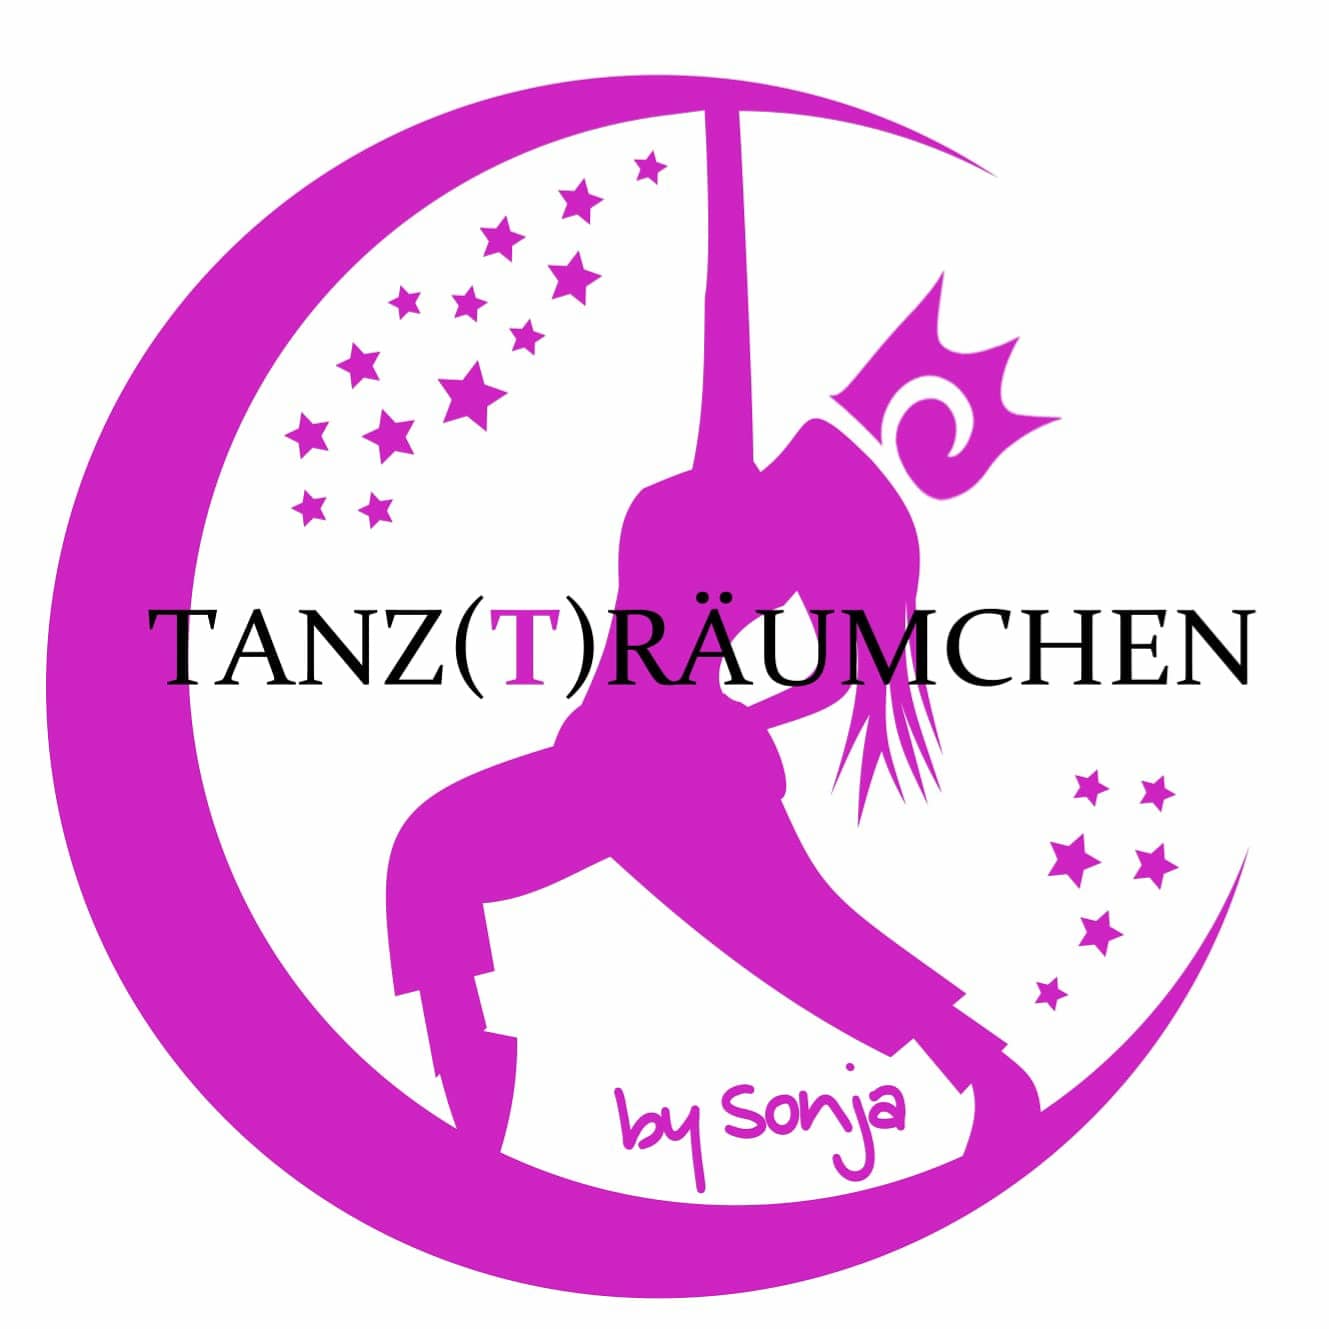 Tanzschule Tanzträumchen by Sonja³